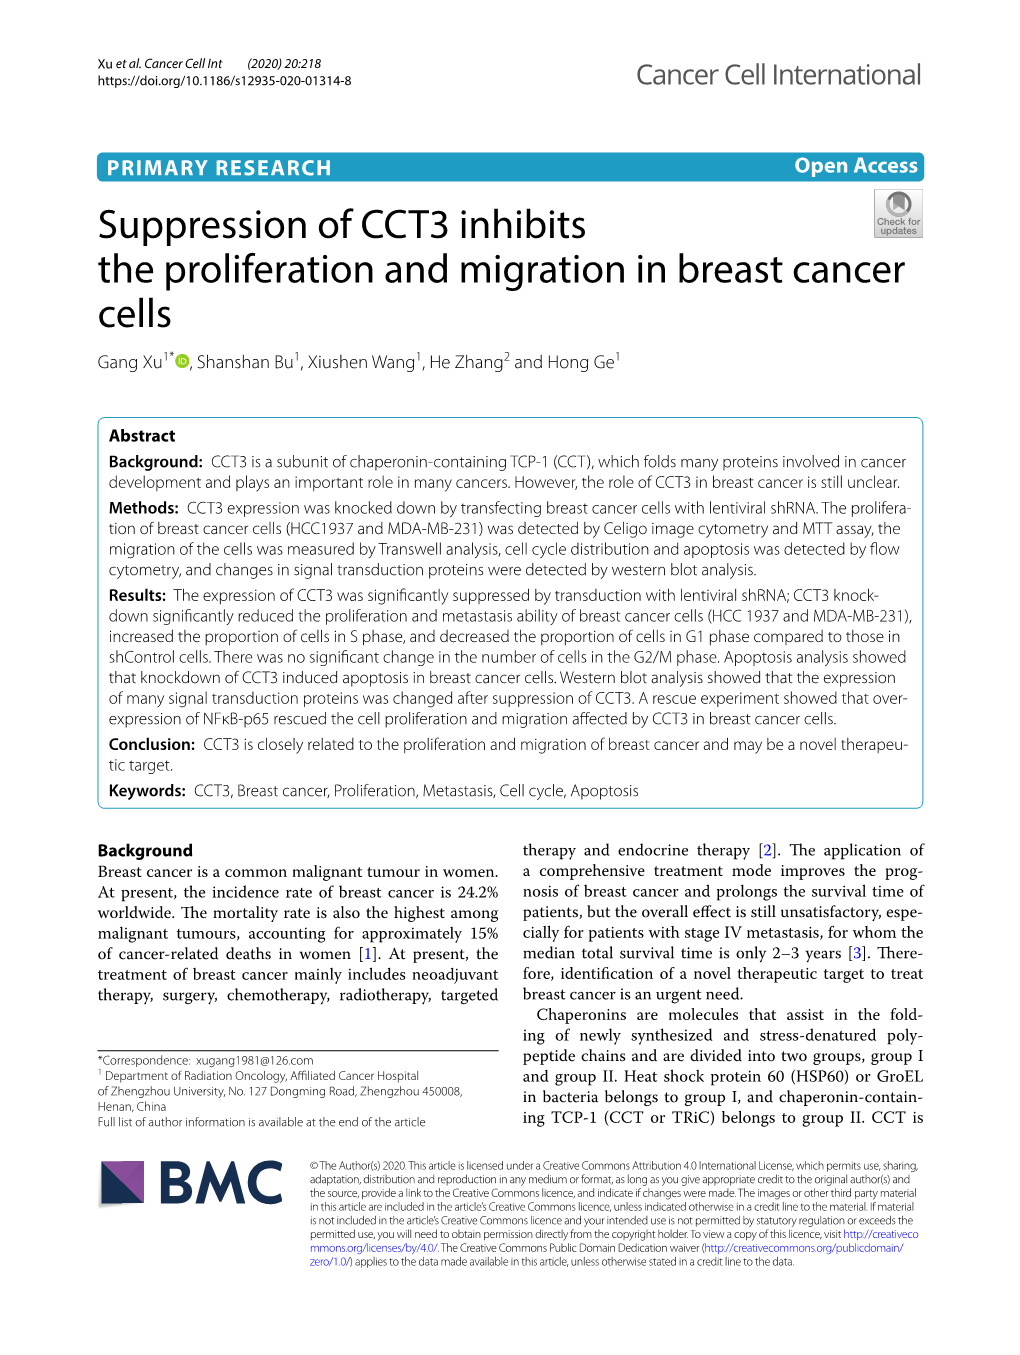 Suppression of CCT3 Inhibits the Proliferation and Migration in Breast Cancer Cells Gang Xu1* , Shanshan Bu1, Xiushen Wang1, He Zhang2 and Hong Ge1